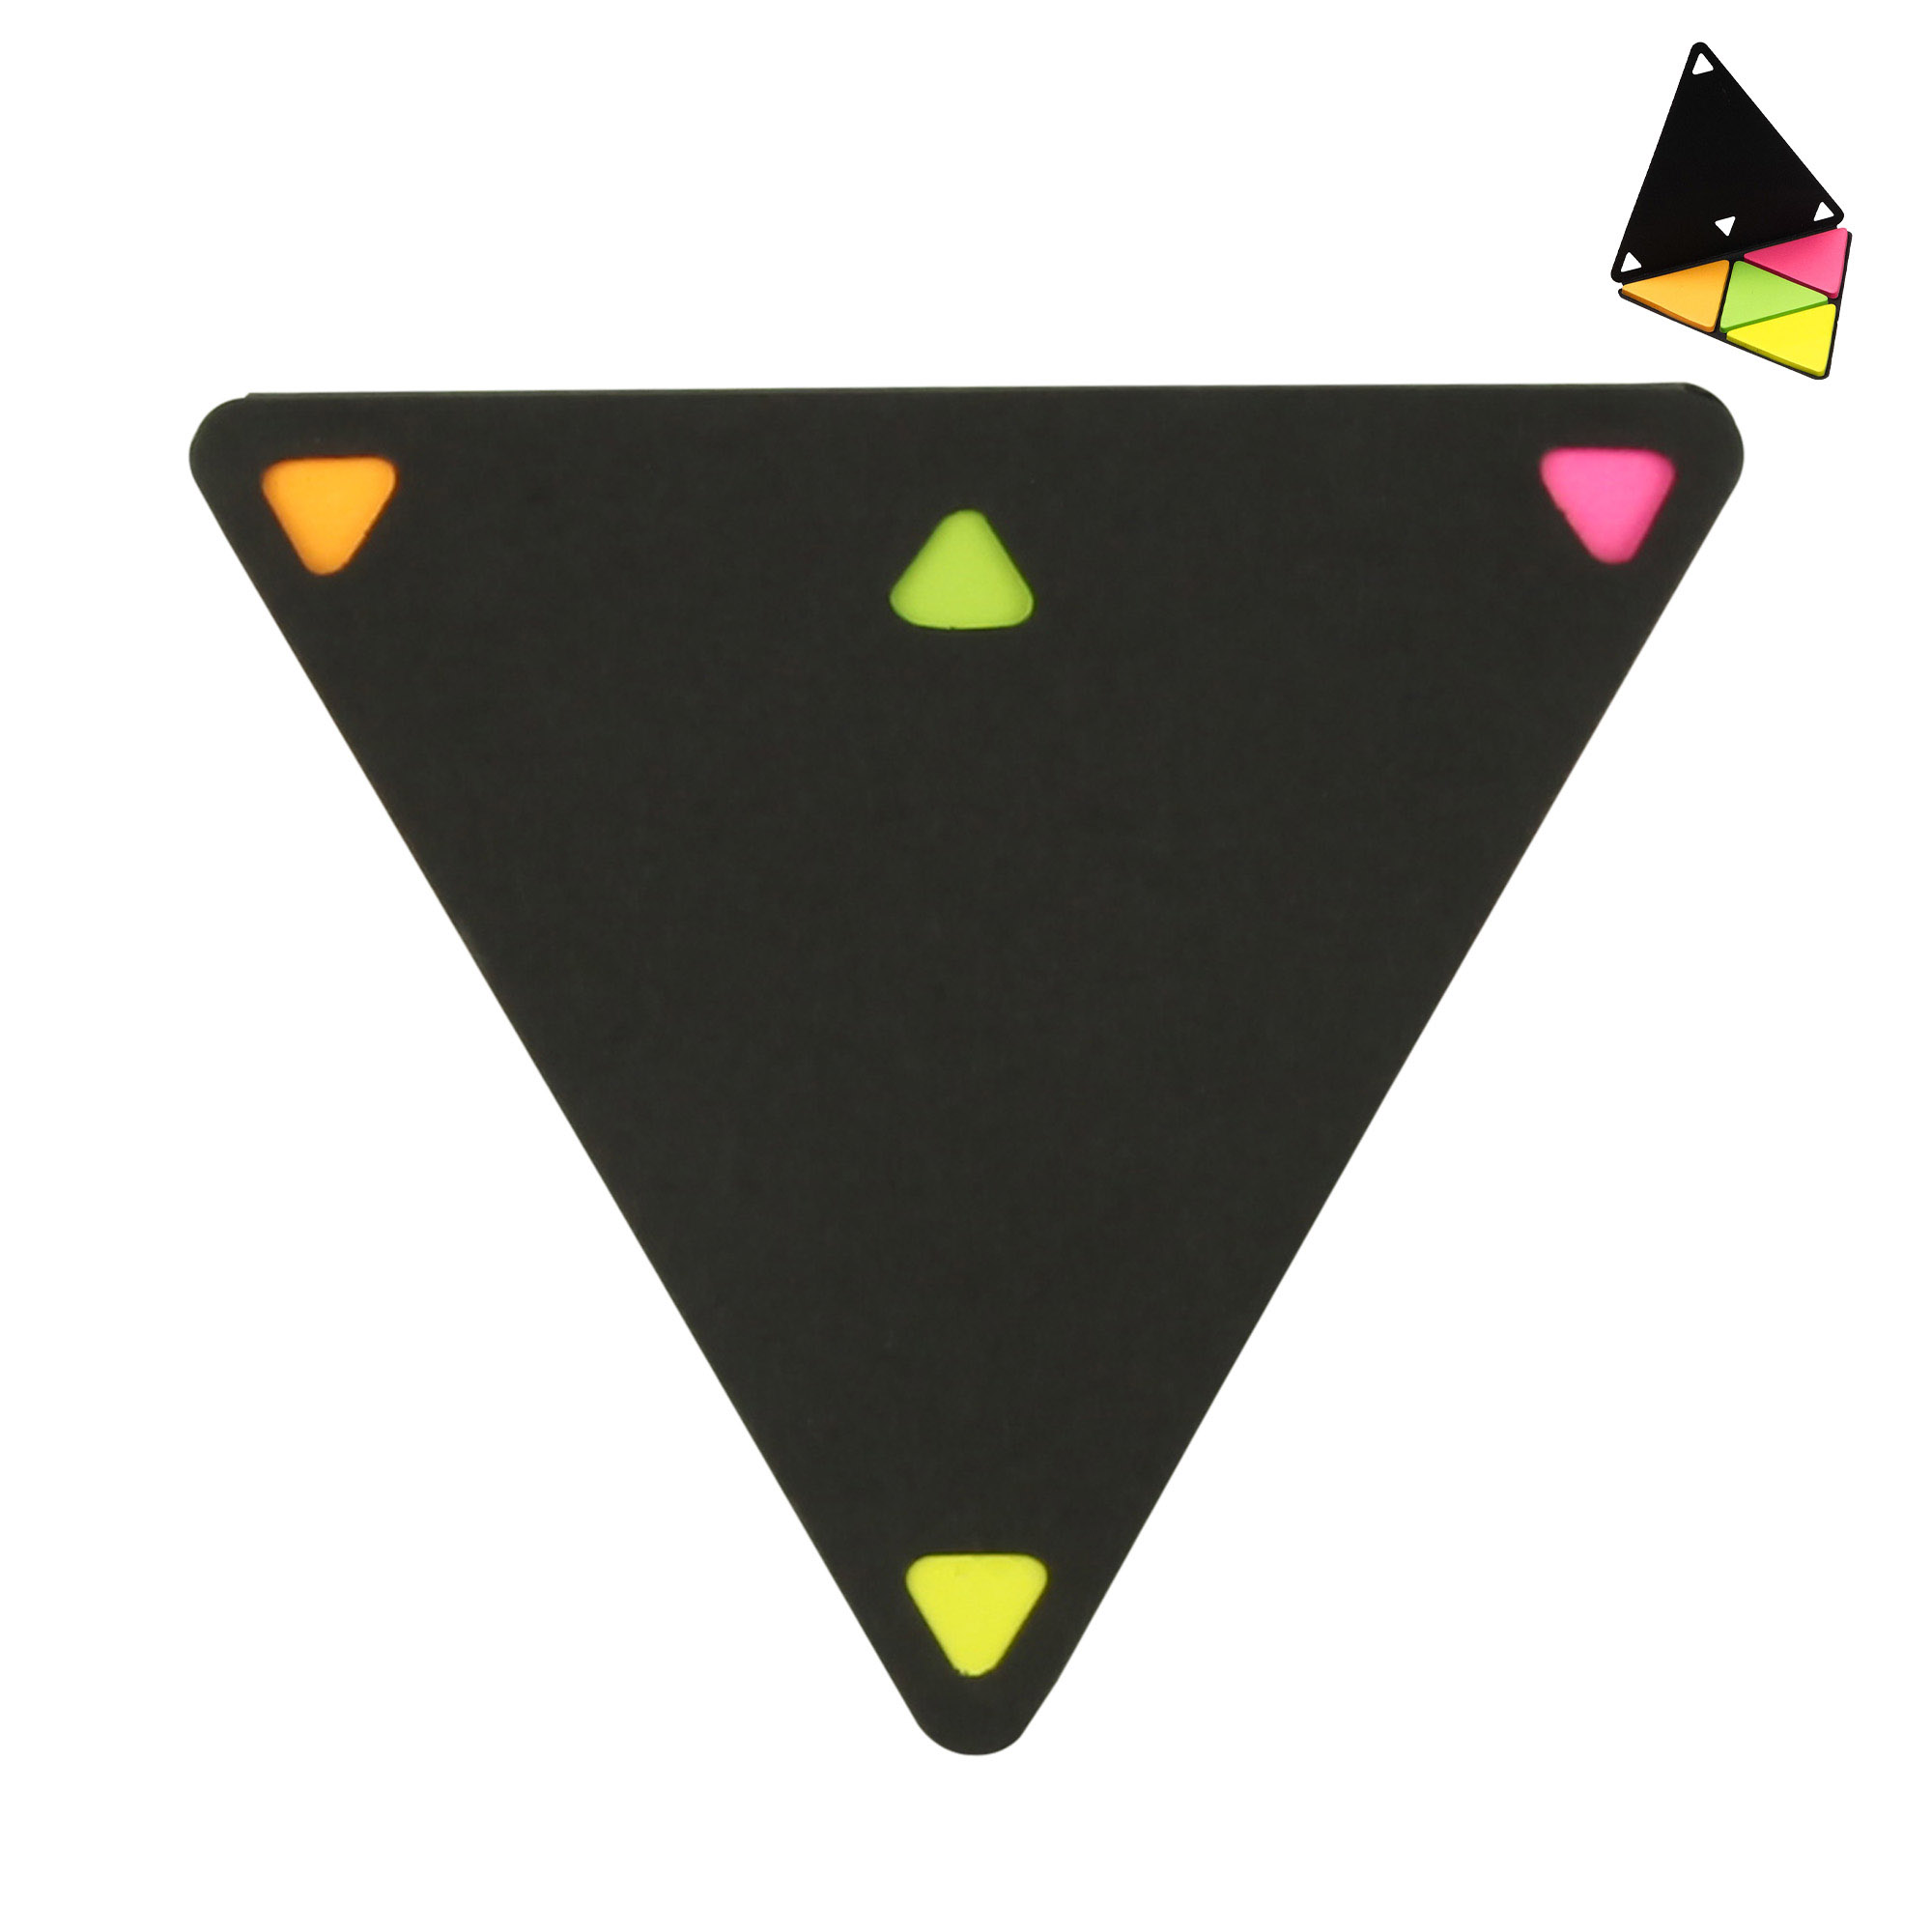 Triangular Memo Pad